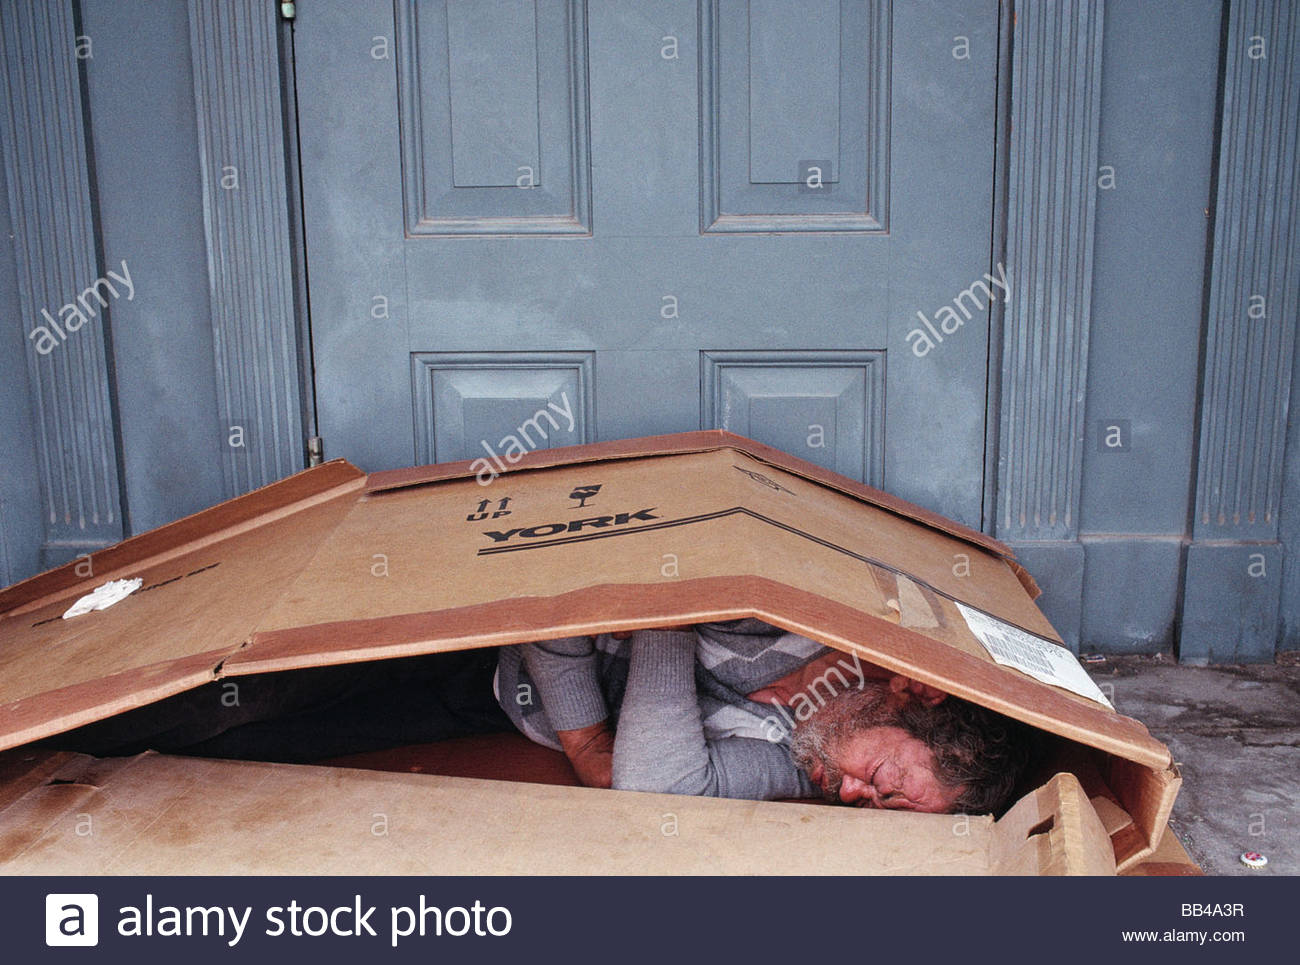 homeless-man-sleeping-in-cardboard-box-old-montreal-montrealquebeccanada-BB4A3R.jpg